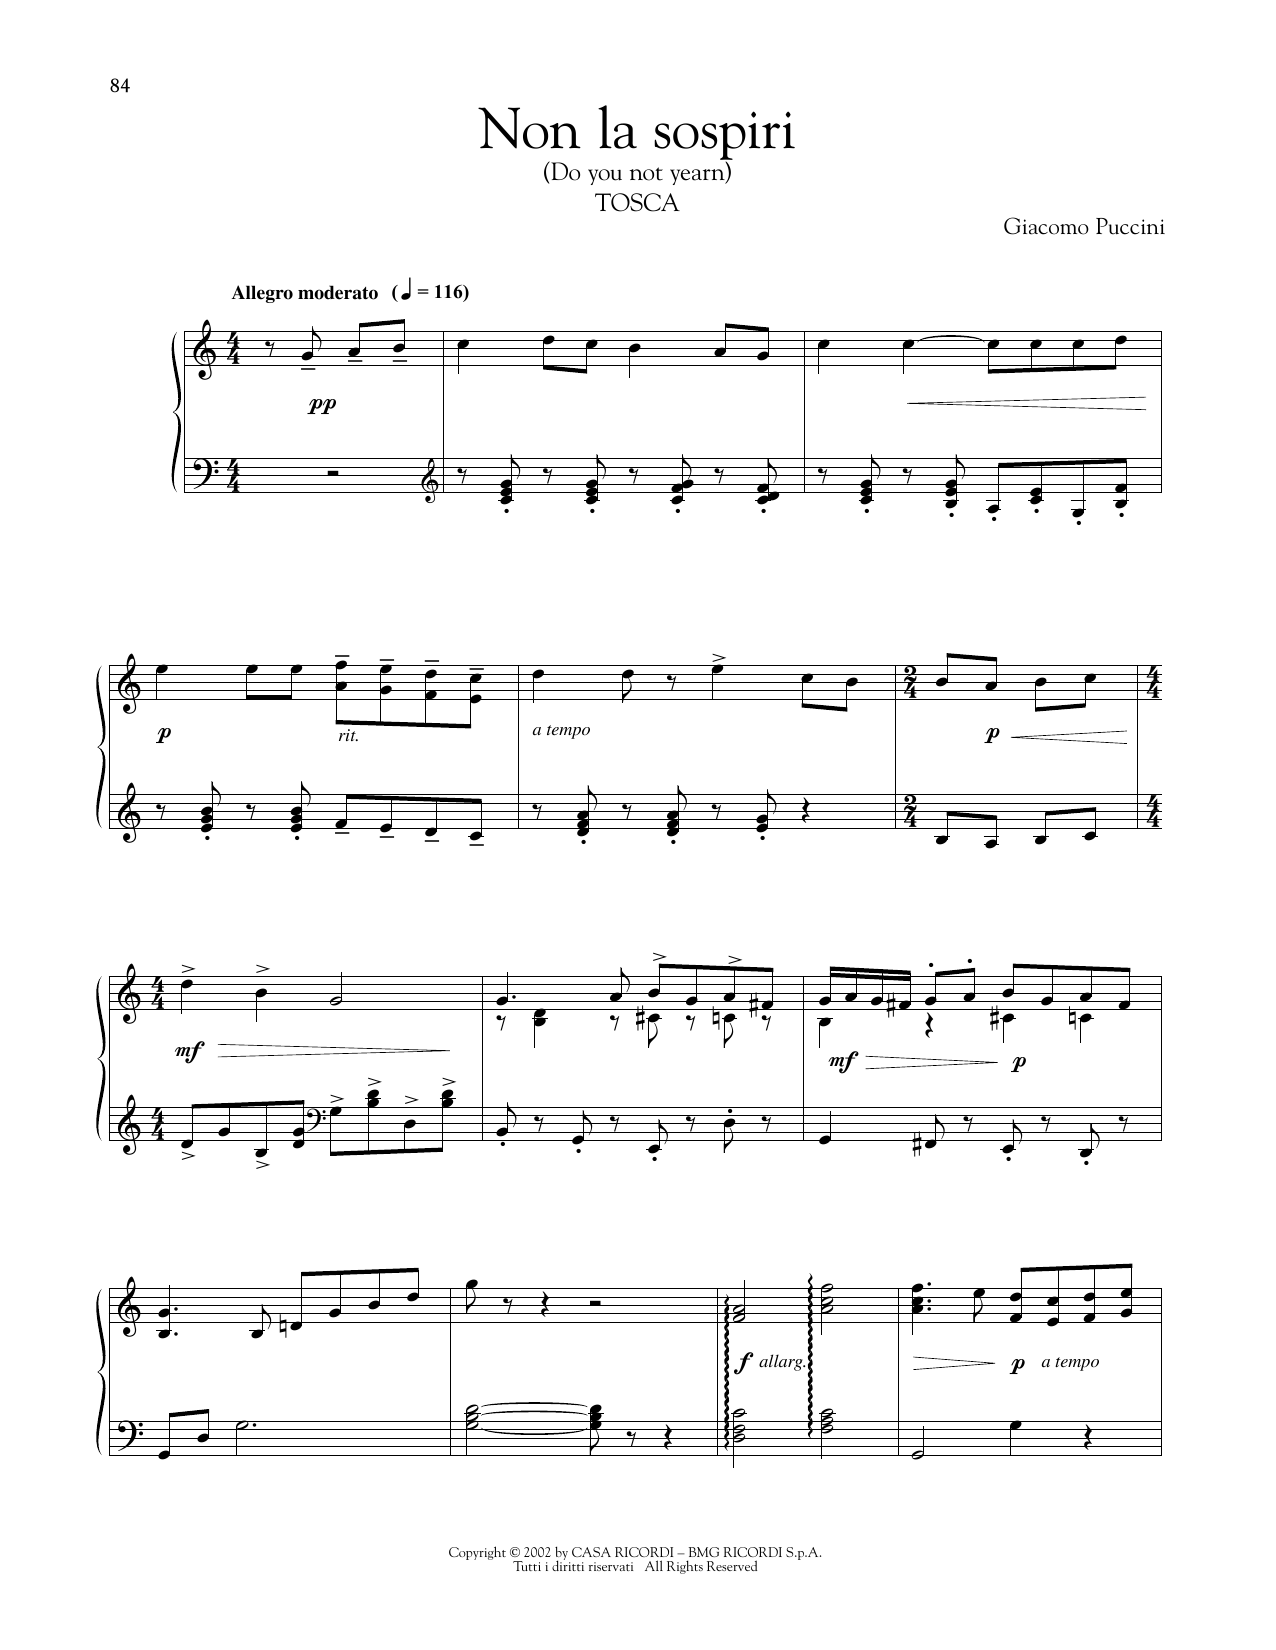 Giacomo Puccini Non la sospiri la nostra casetta sheet music notes and chords arranged for Piano Solo